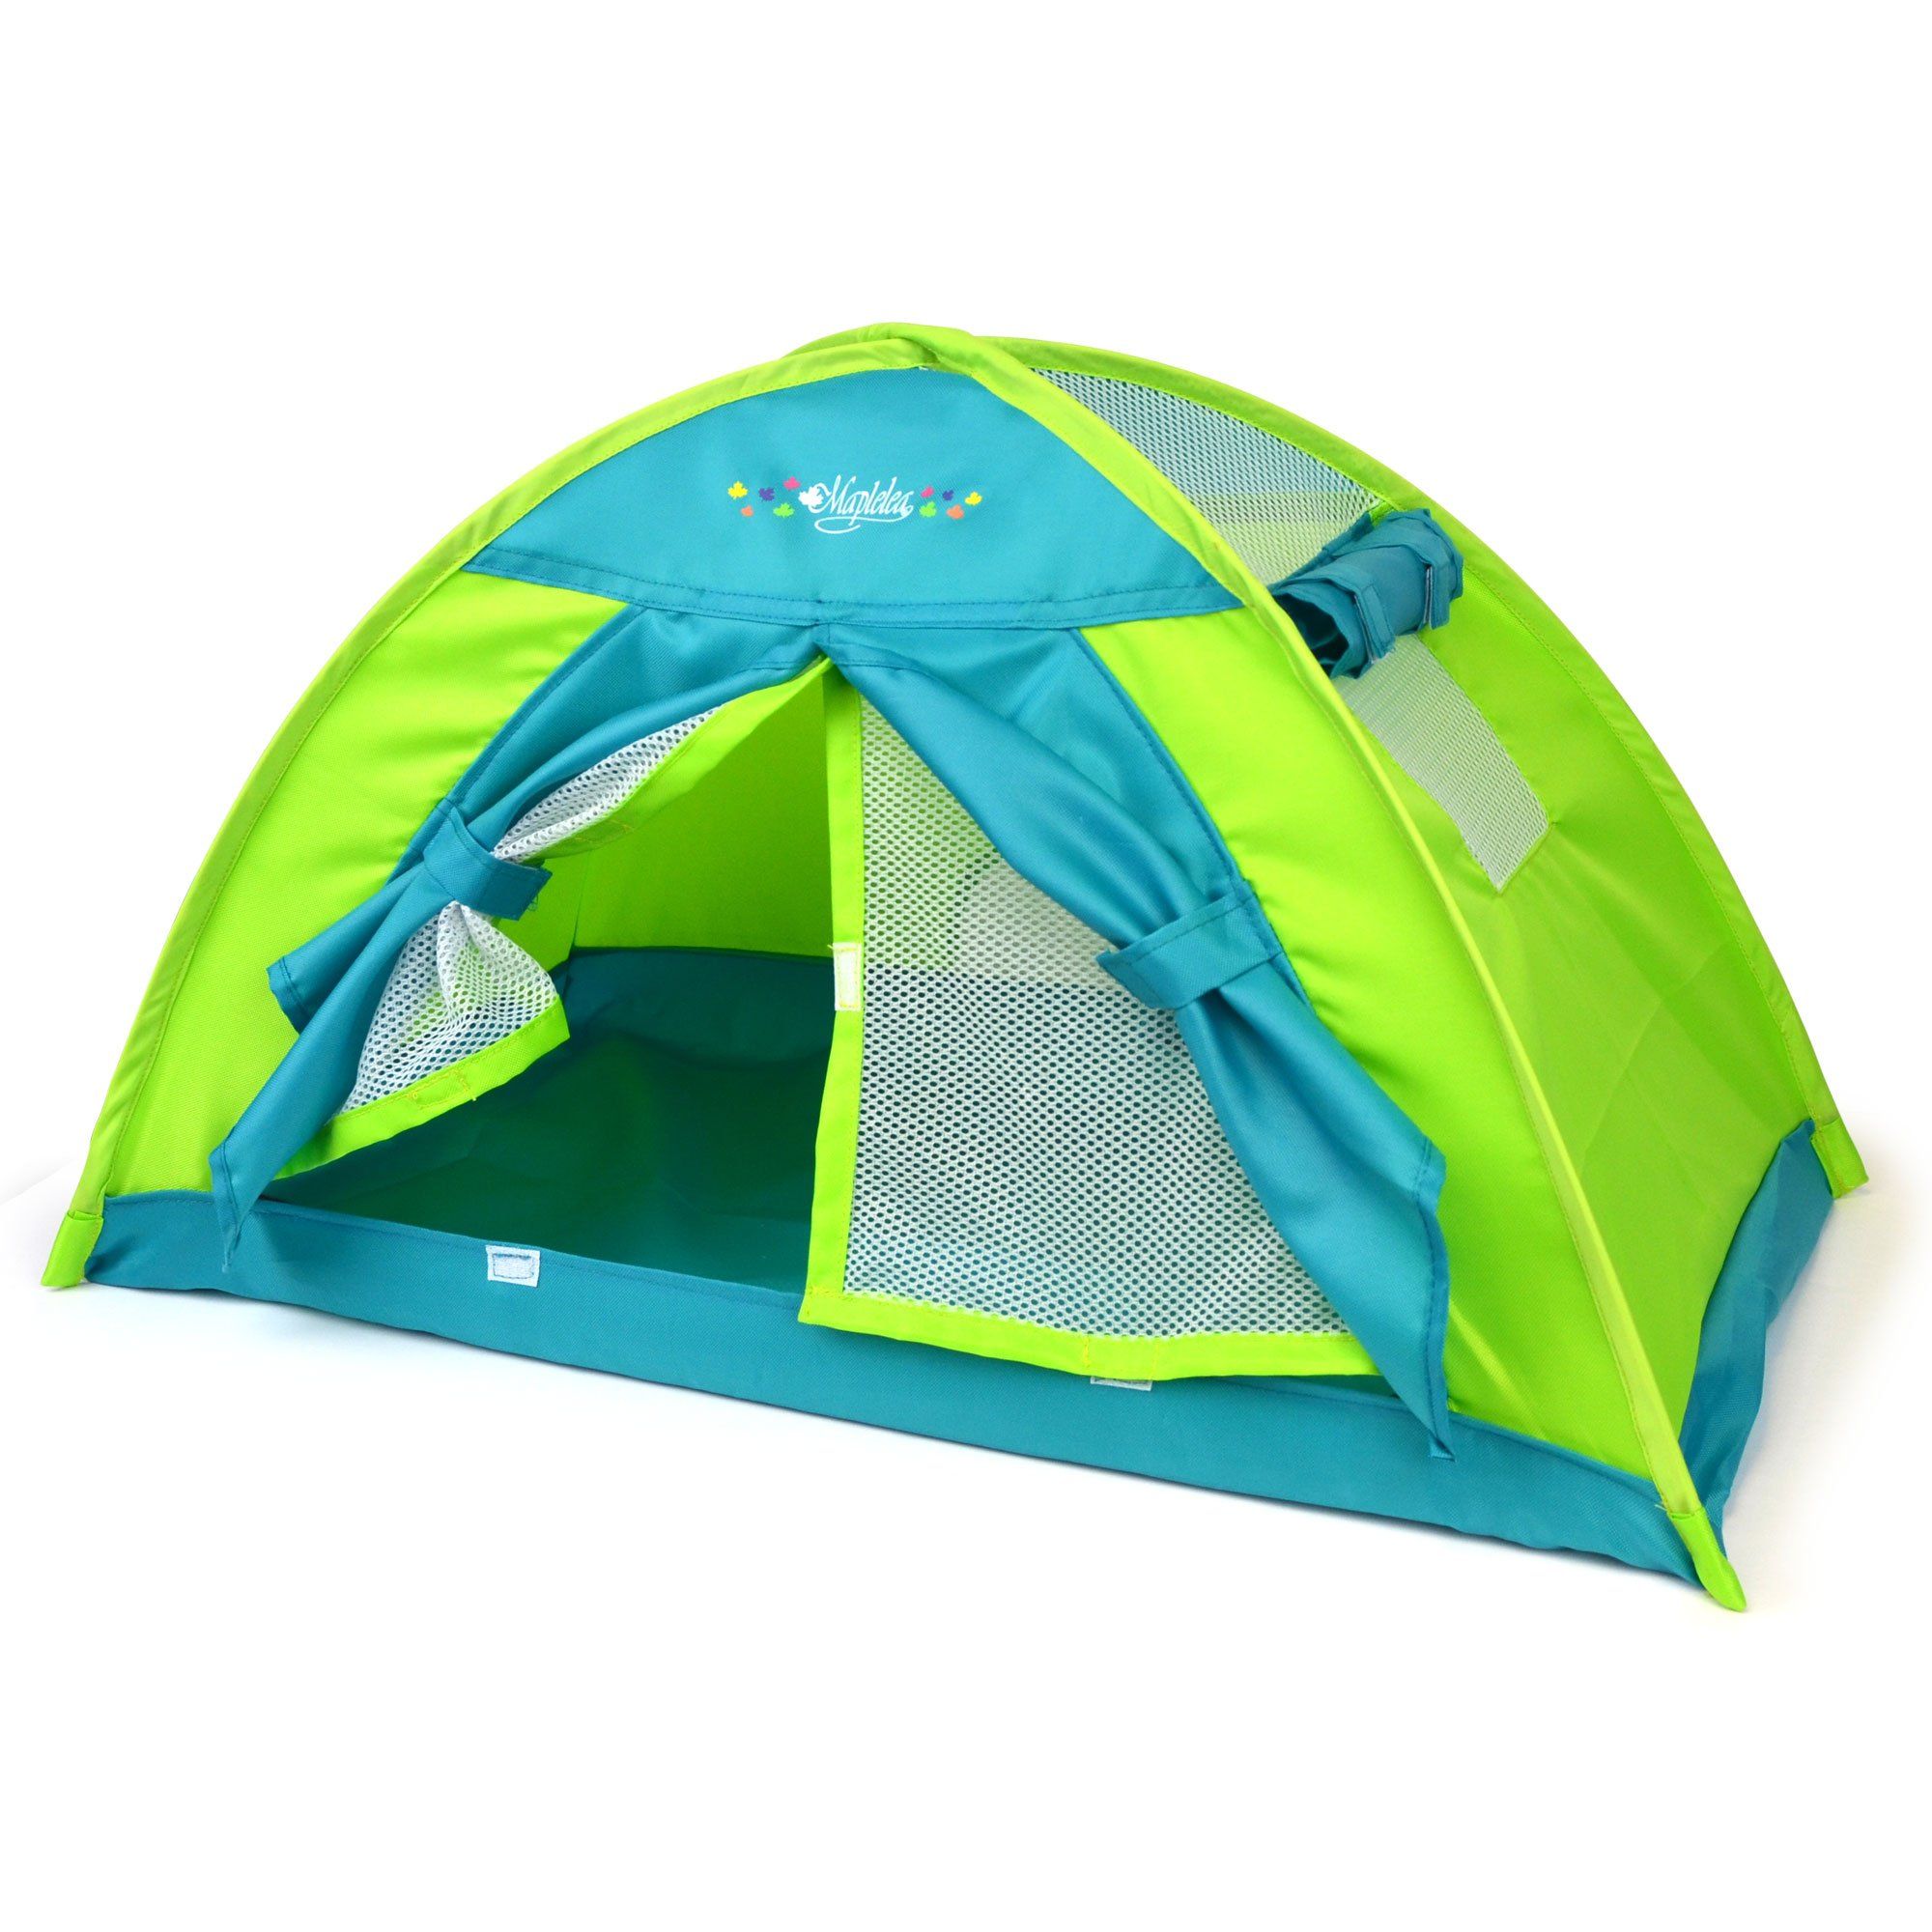 antenne Komst Accumulatie Pop-Up Tent KT11 for 18 inch dolls